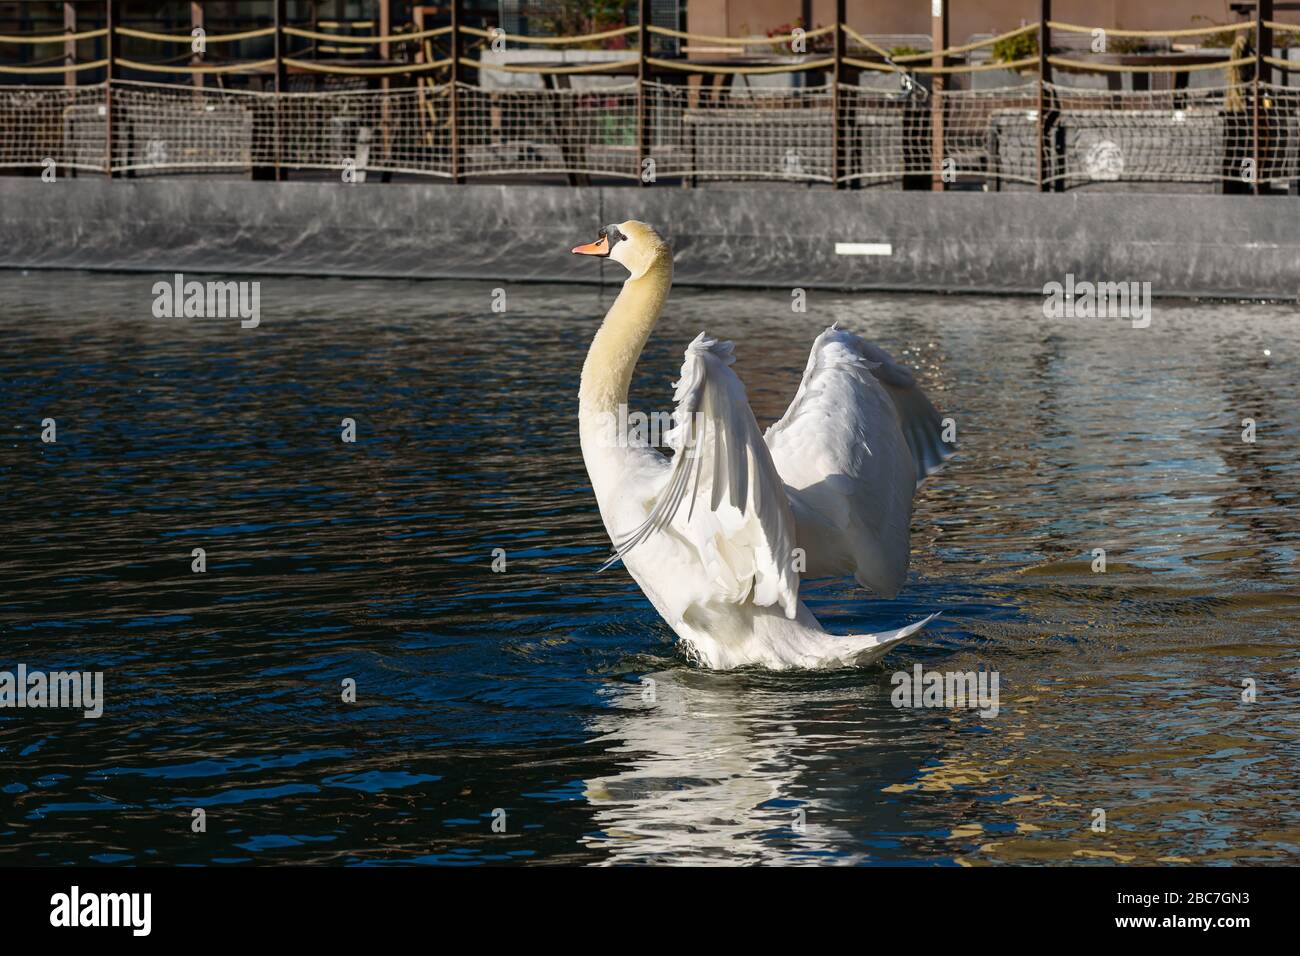 White swan spreading wings on the water of the Bassin de la Villette in Paris, France. Stock Photo